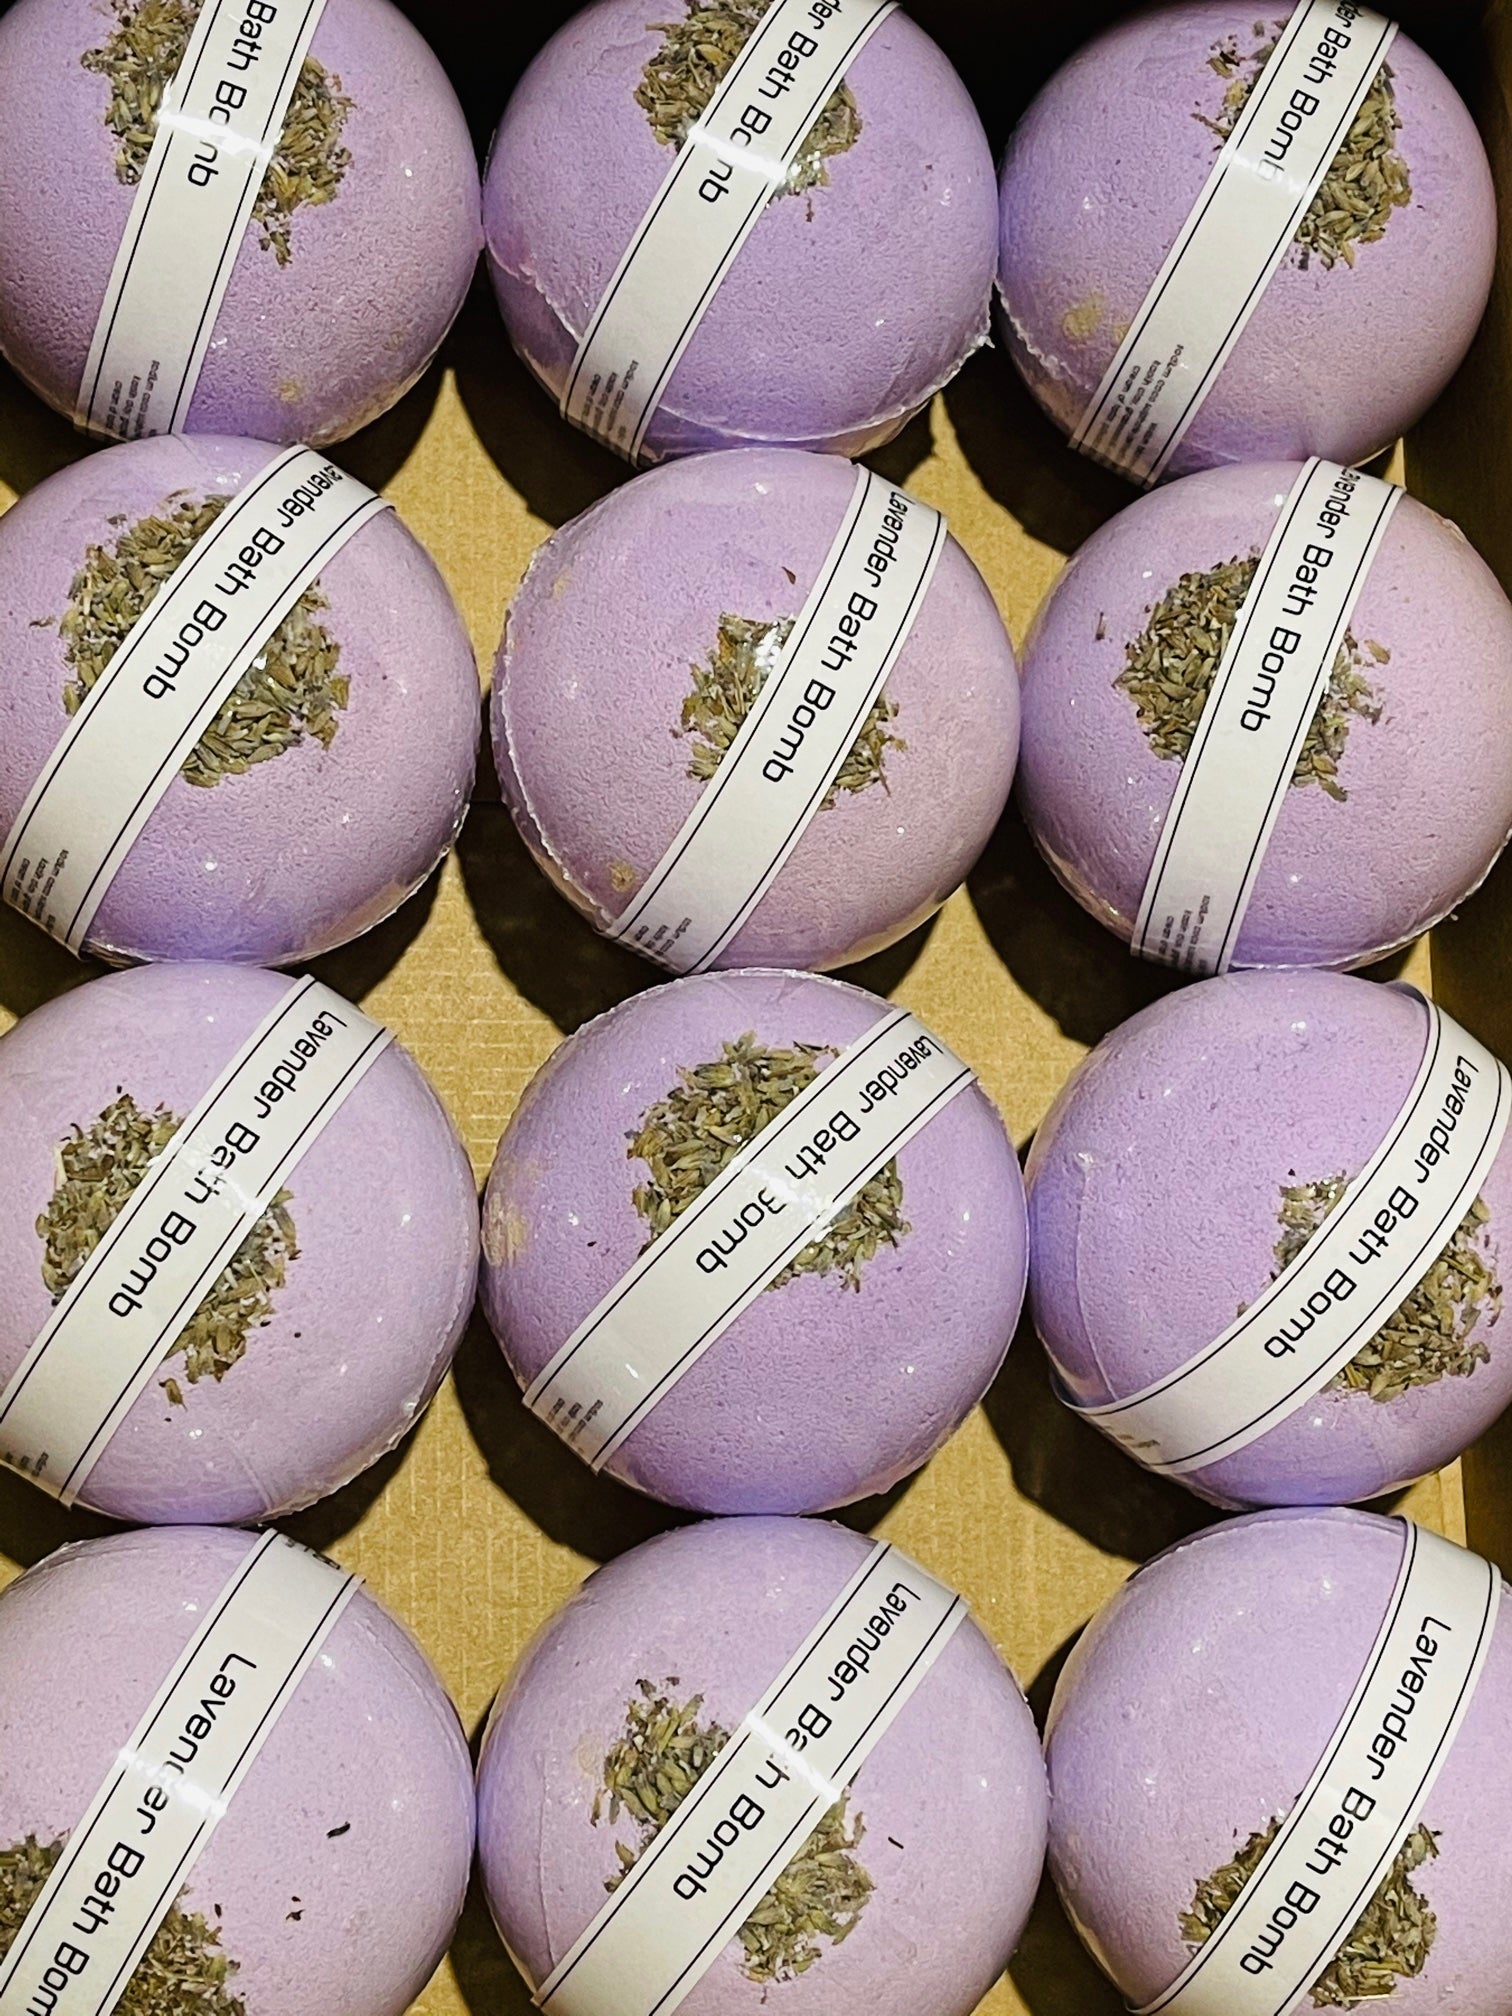 Lavender Bath Bomb - Soapmaid - Photo 1